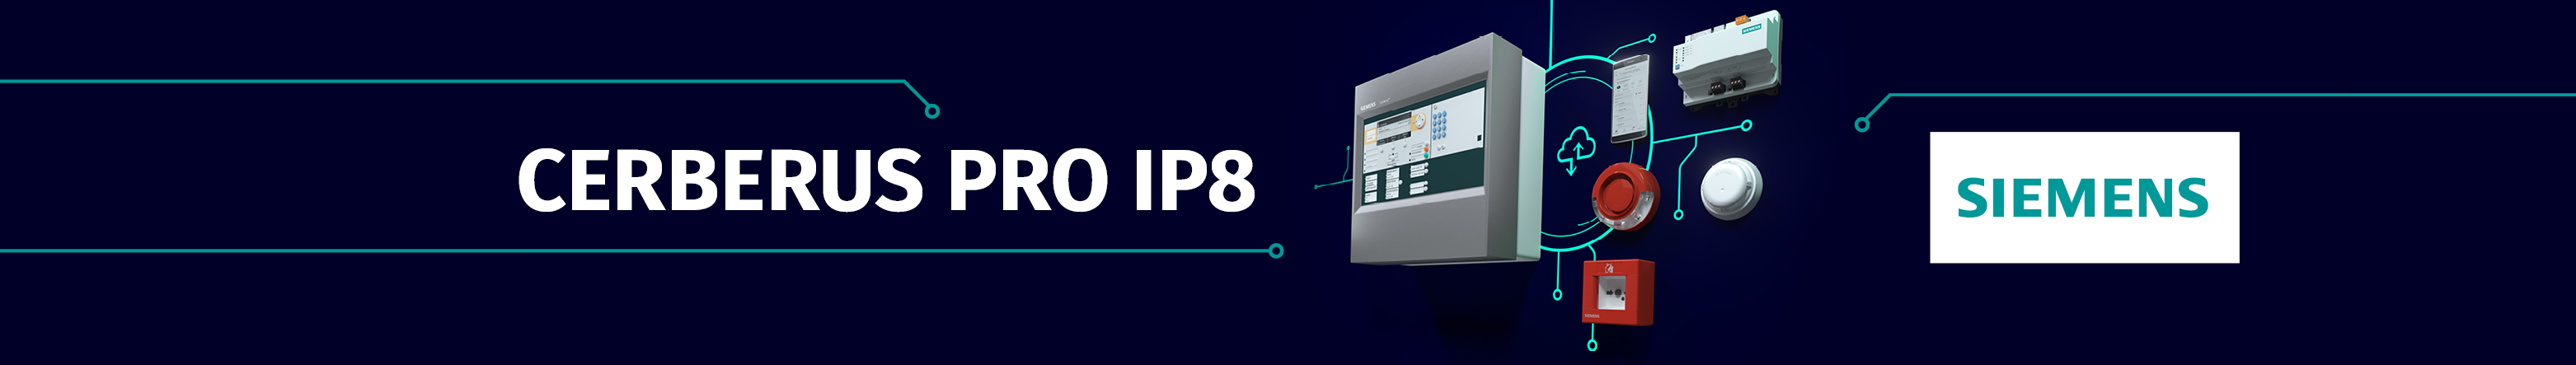 Siemens Cerberus Pro IP8